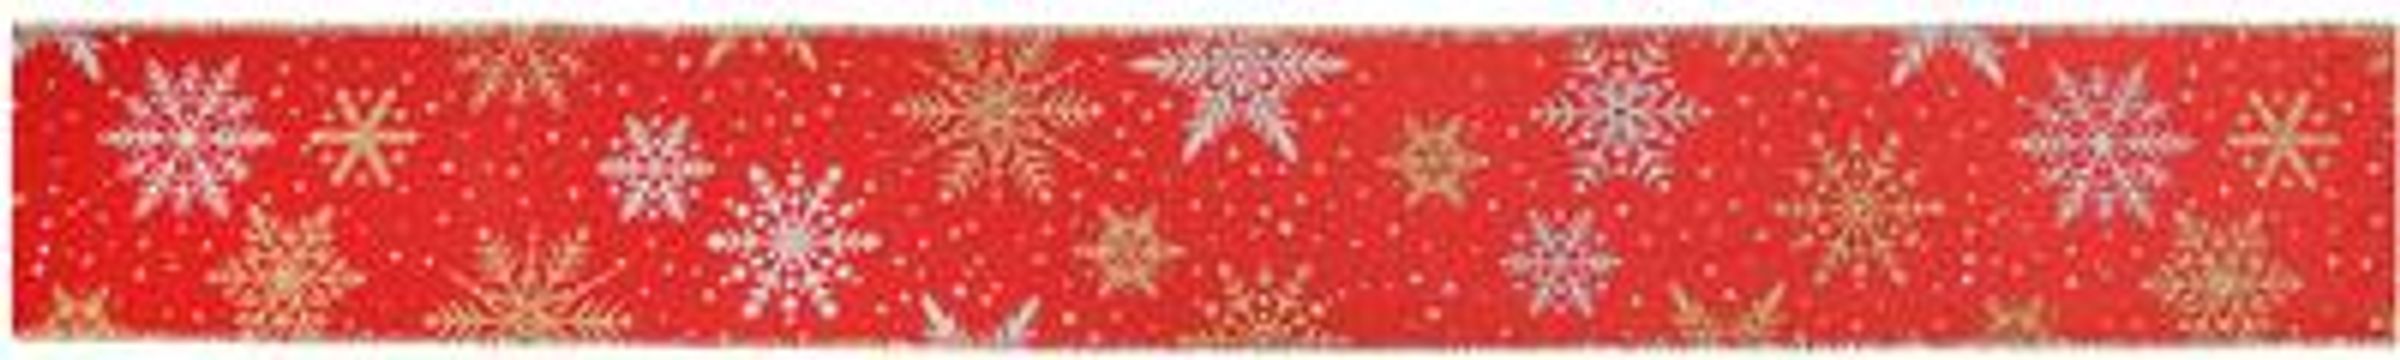 Eleganza Wired Edge Christmas Snow Flake 63mm x 9.1m Design No.397 Red/Mixed - Christmas Ribbon